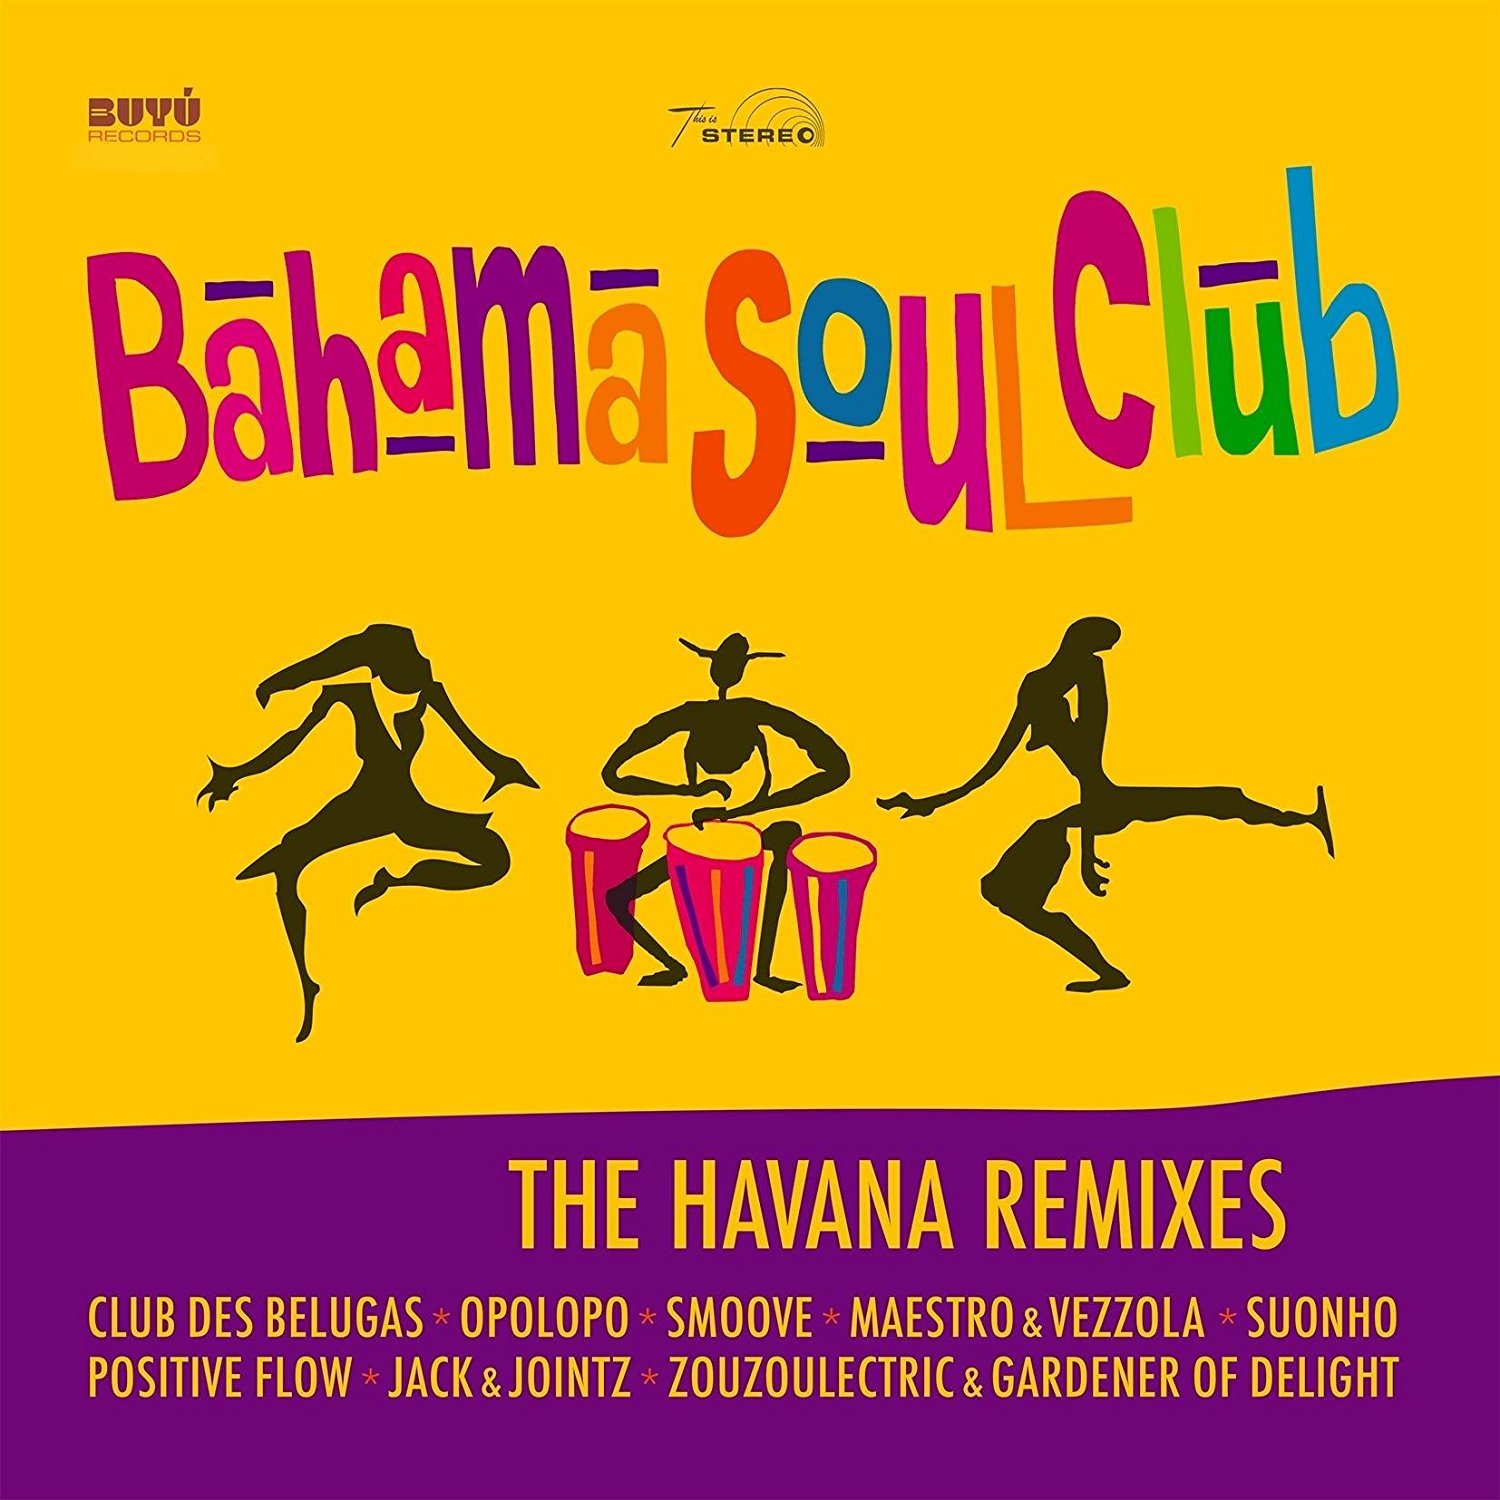 electro 06 17 Bahama soul club